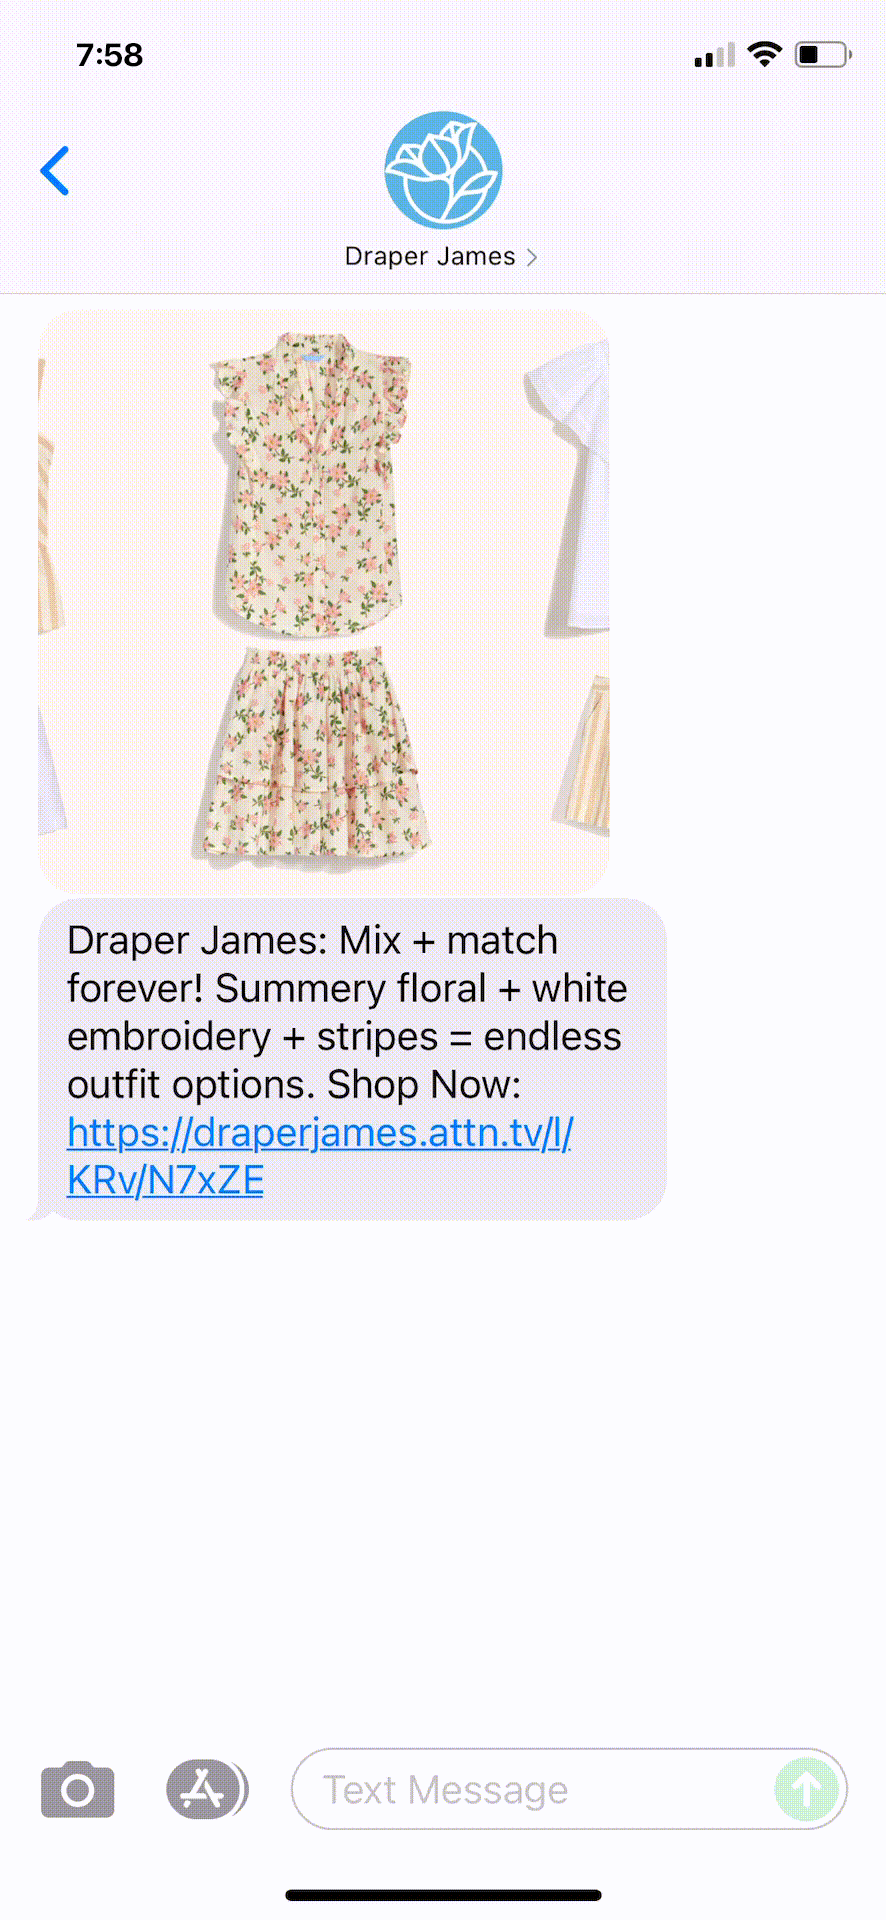 Draper-James-Text-Message-Marketing-Example-06.13.2021